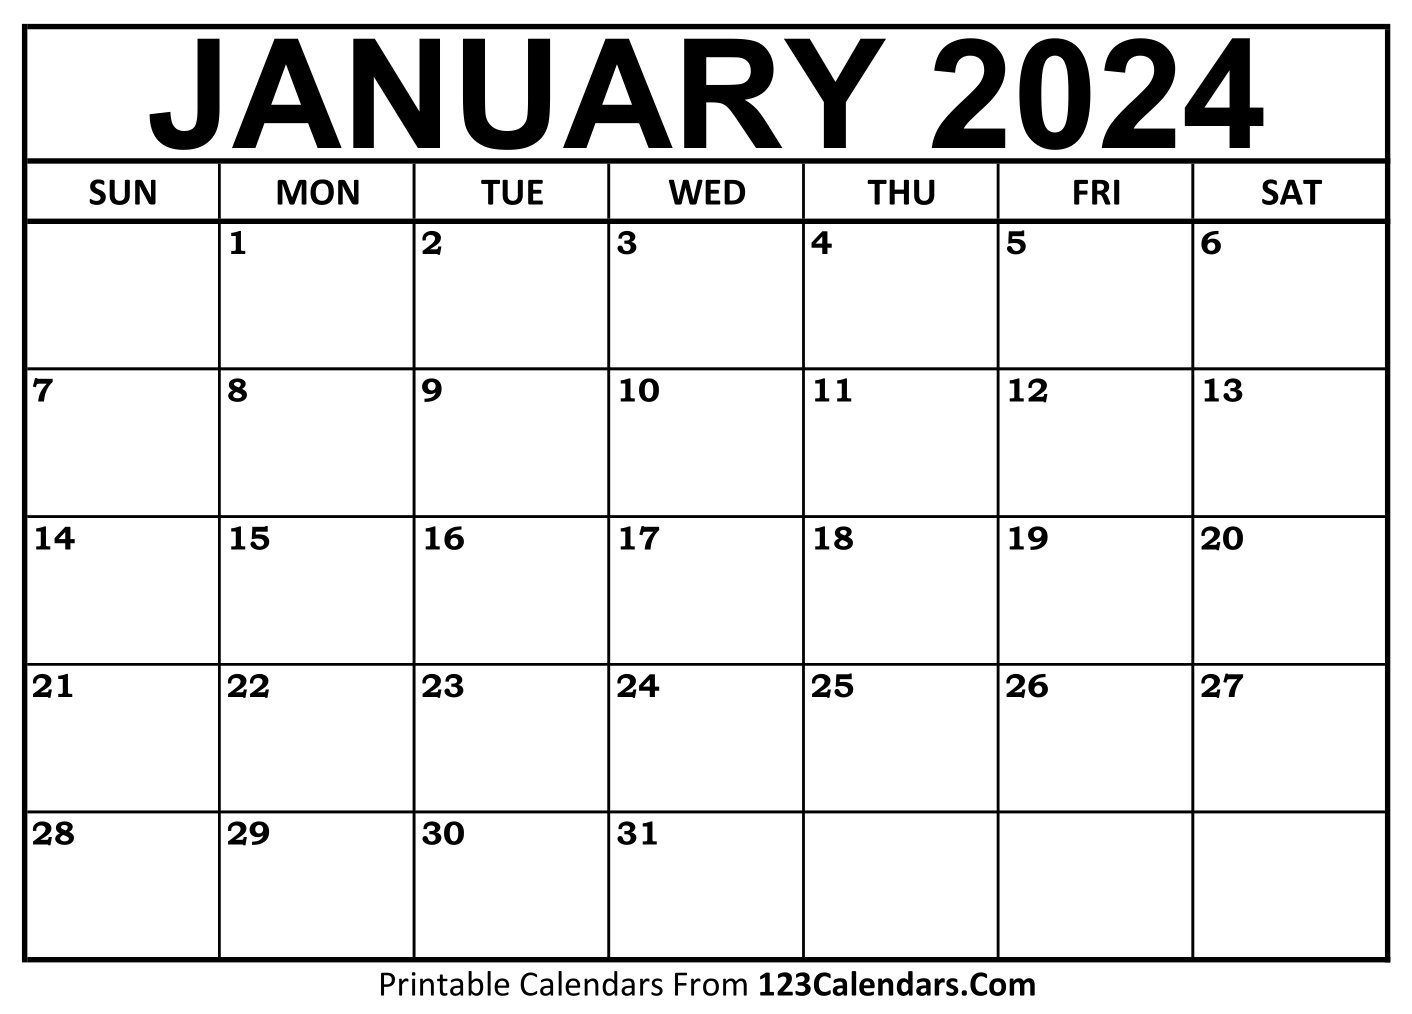 Printable January 2024 Calendar | Calendar 2024 | Printable Calendar 2024